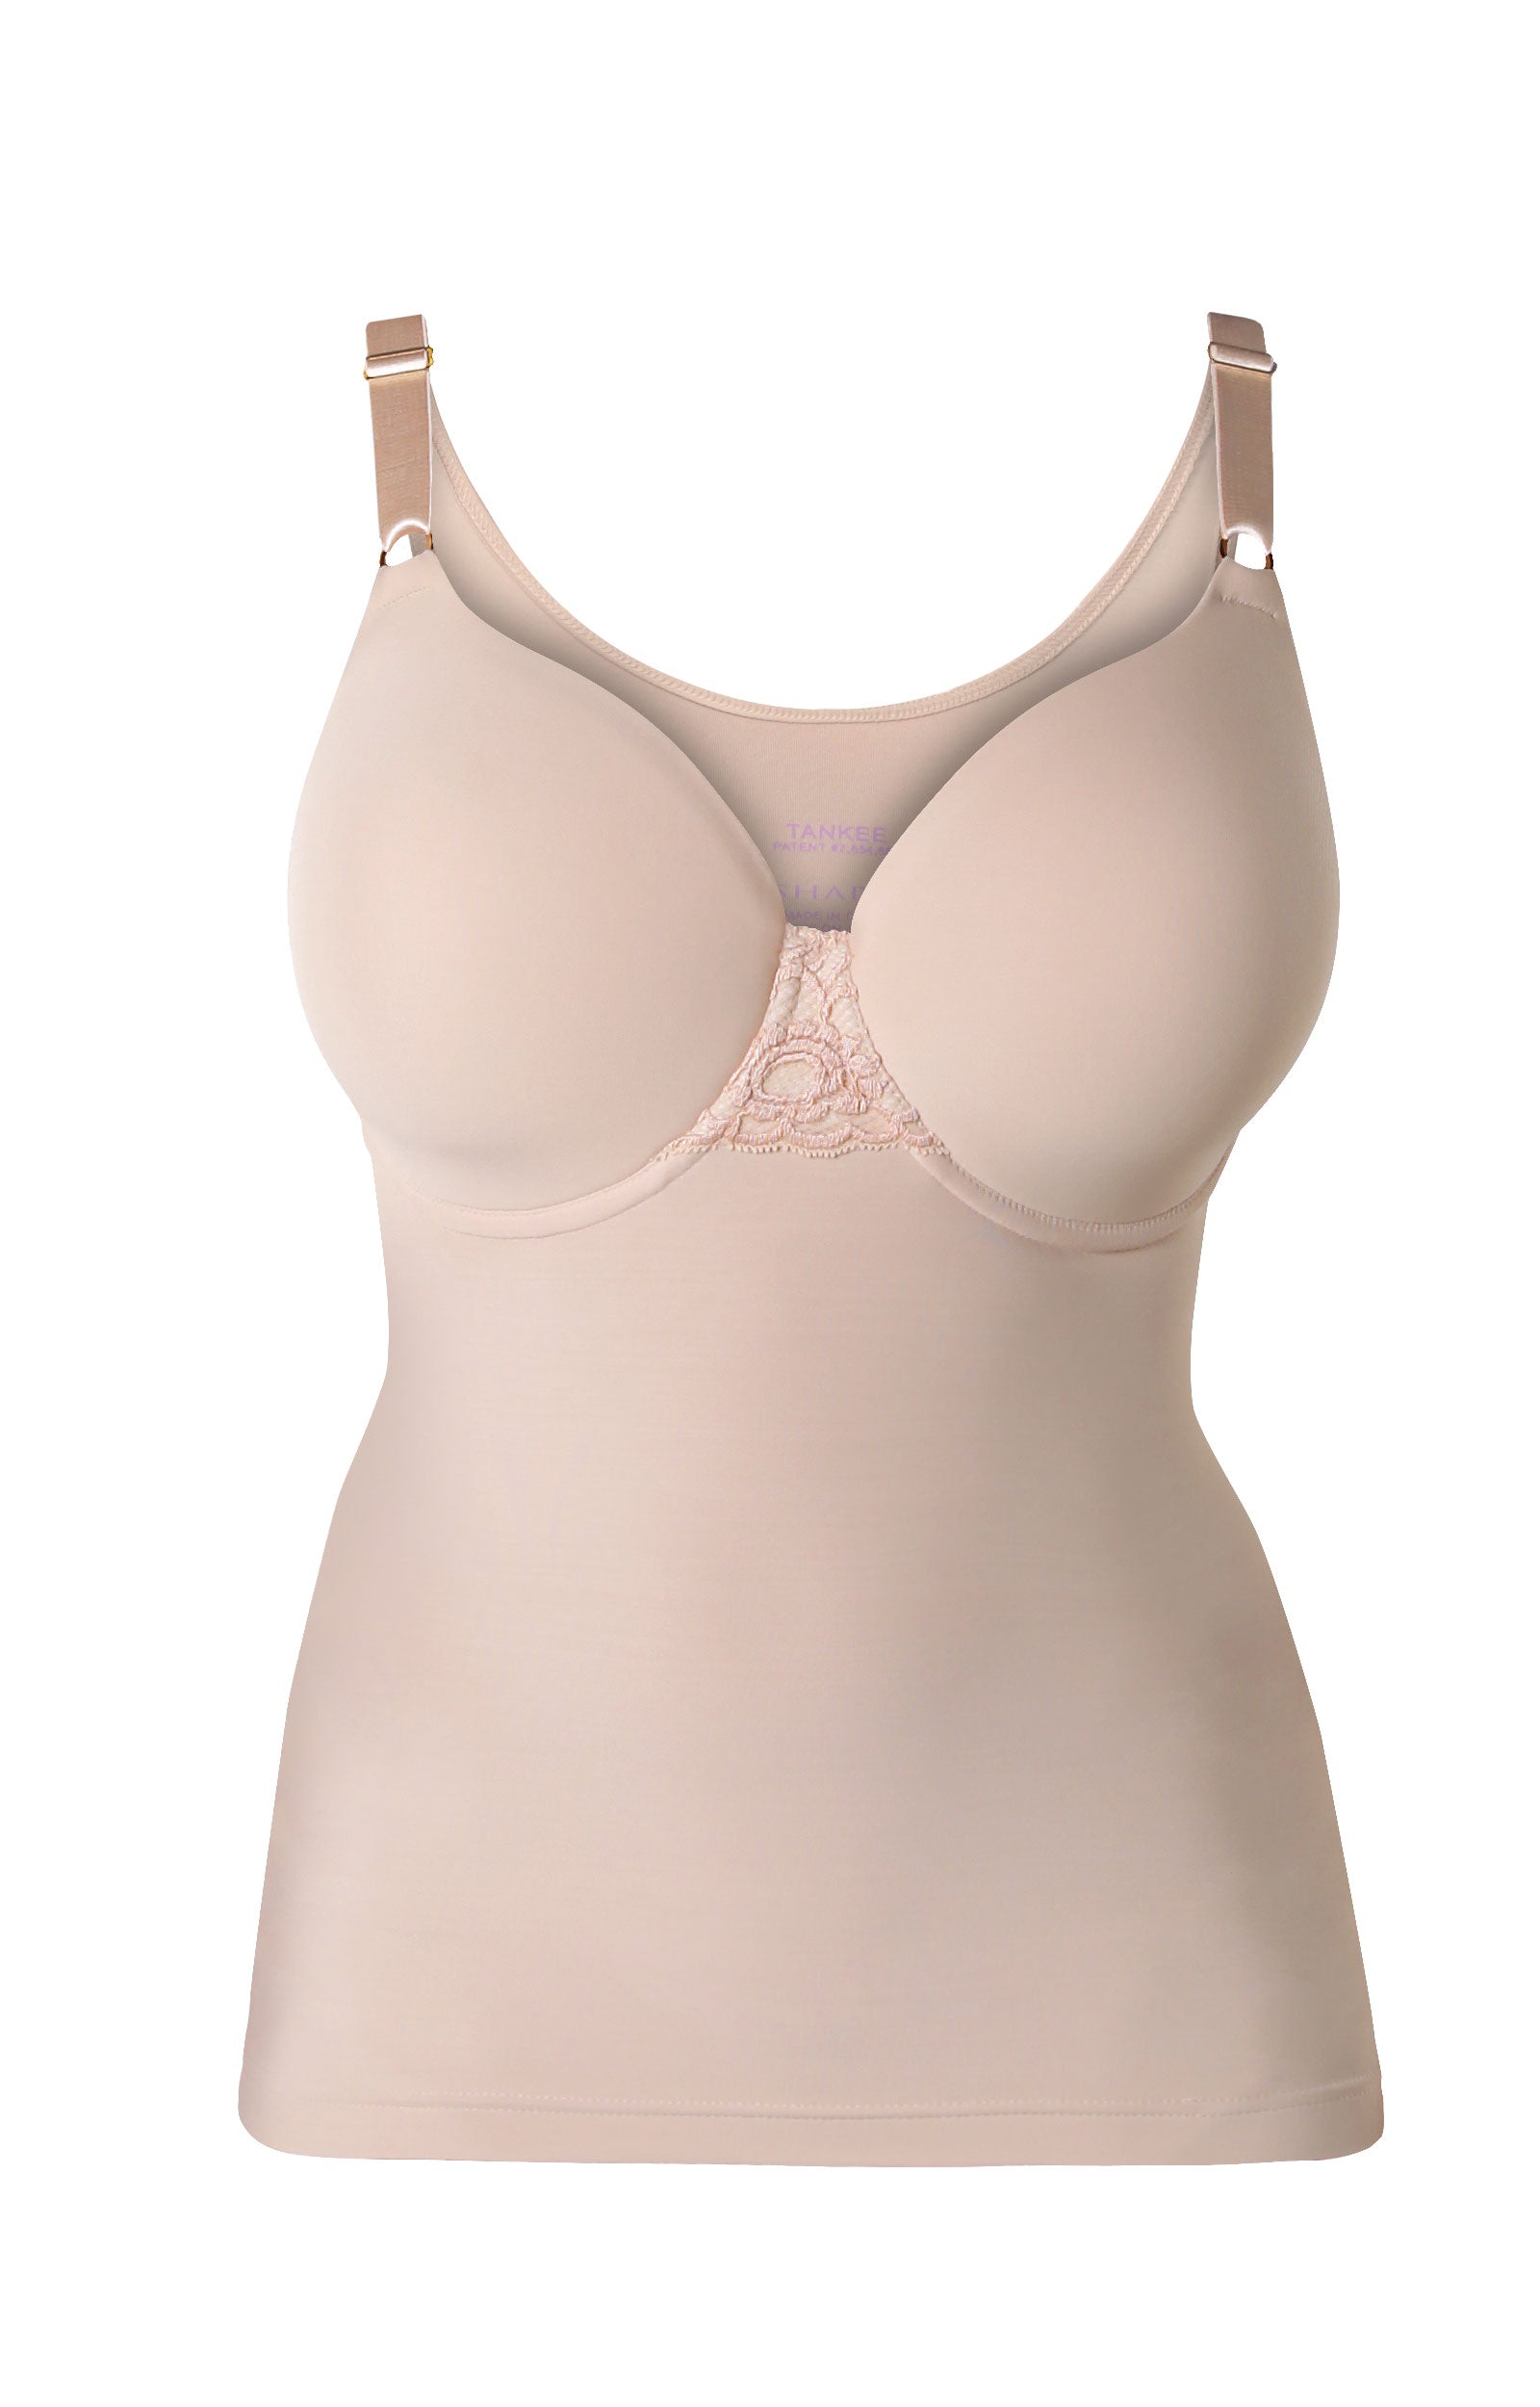 SPANX, Intimates & Sleepwear, Spanx Bra 38c Nude Excellent Condition